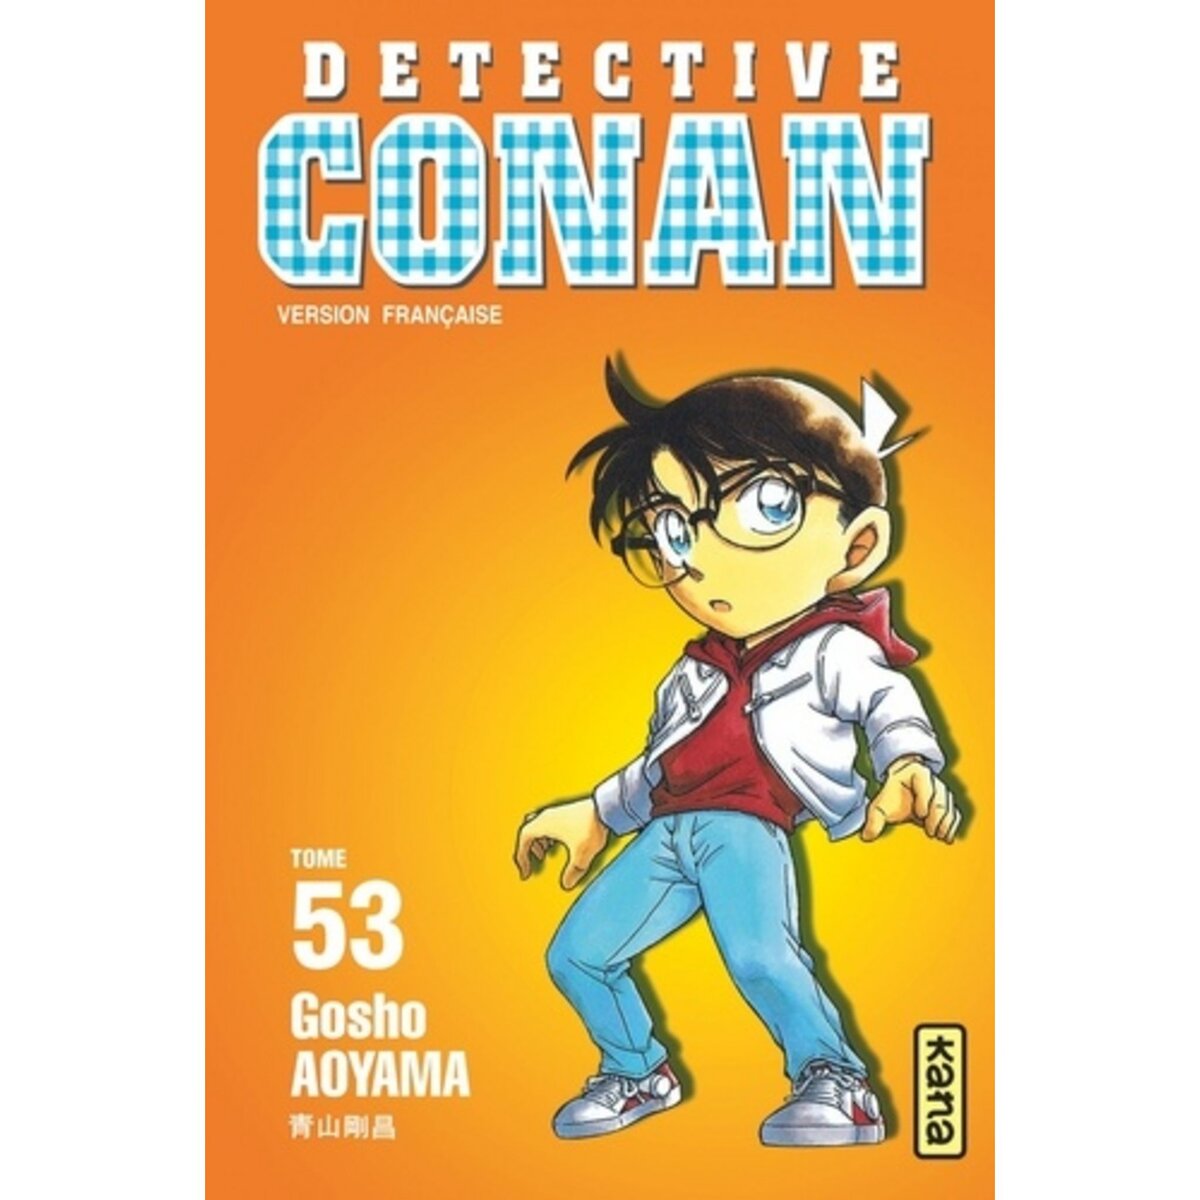  DETECTIVE CONAN TOME 53, Aoyama Gôshô